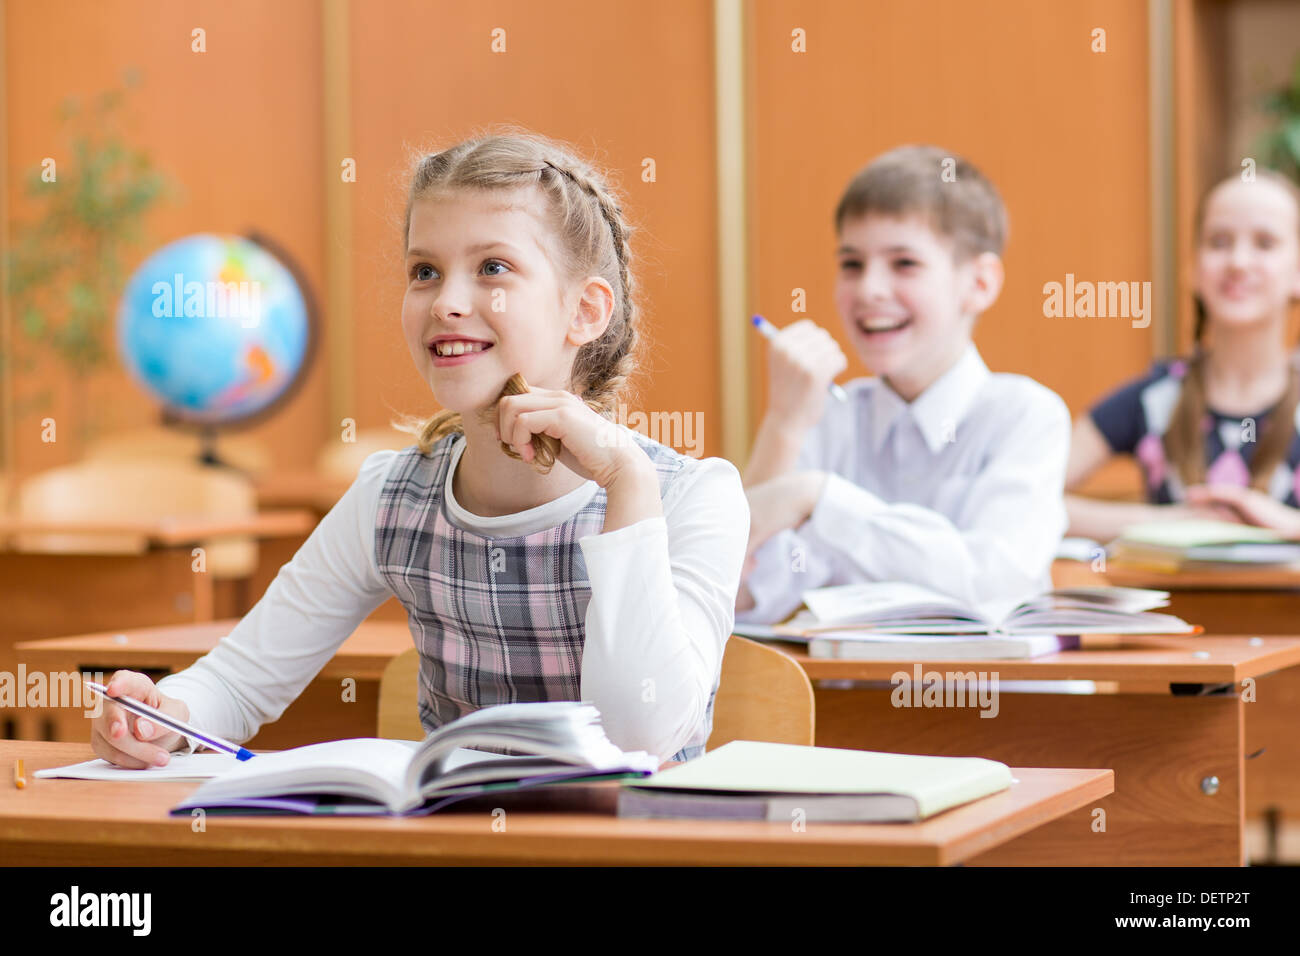 school children at lesson in classroom Stock Photo